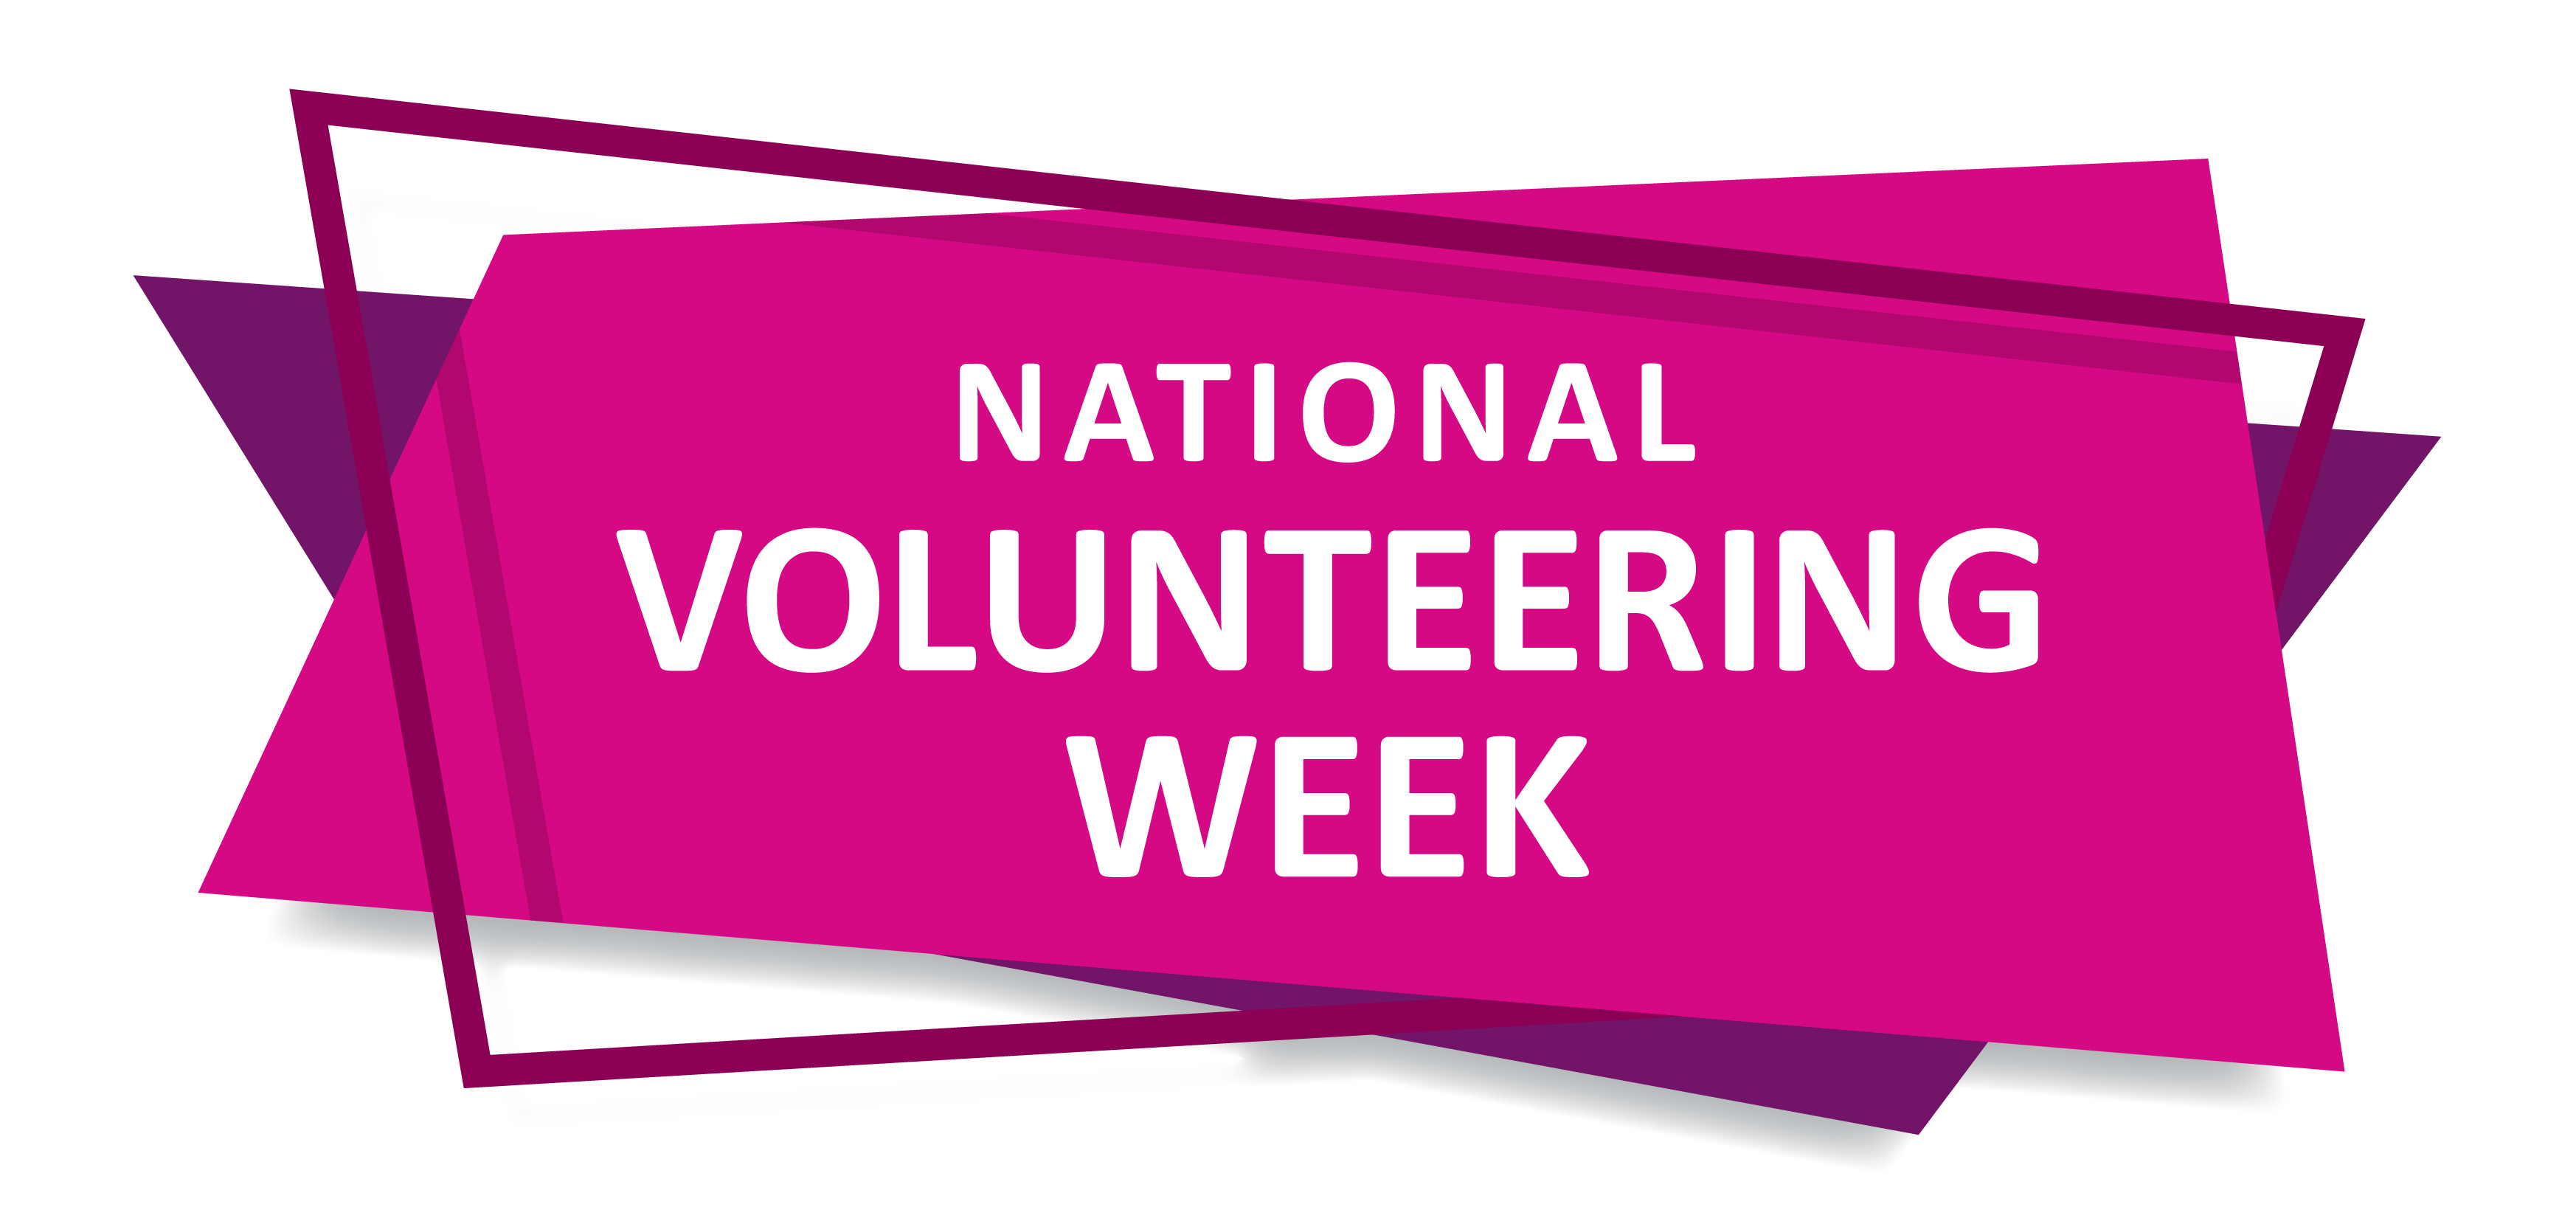 National Volunteering Week Graphic Clear Background 08 